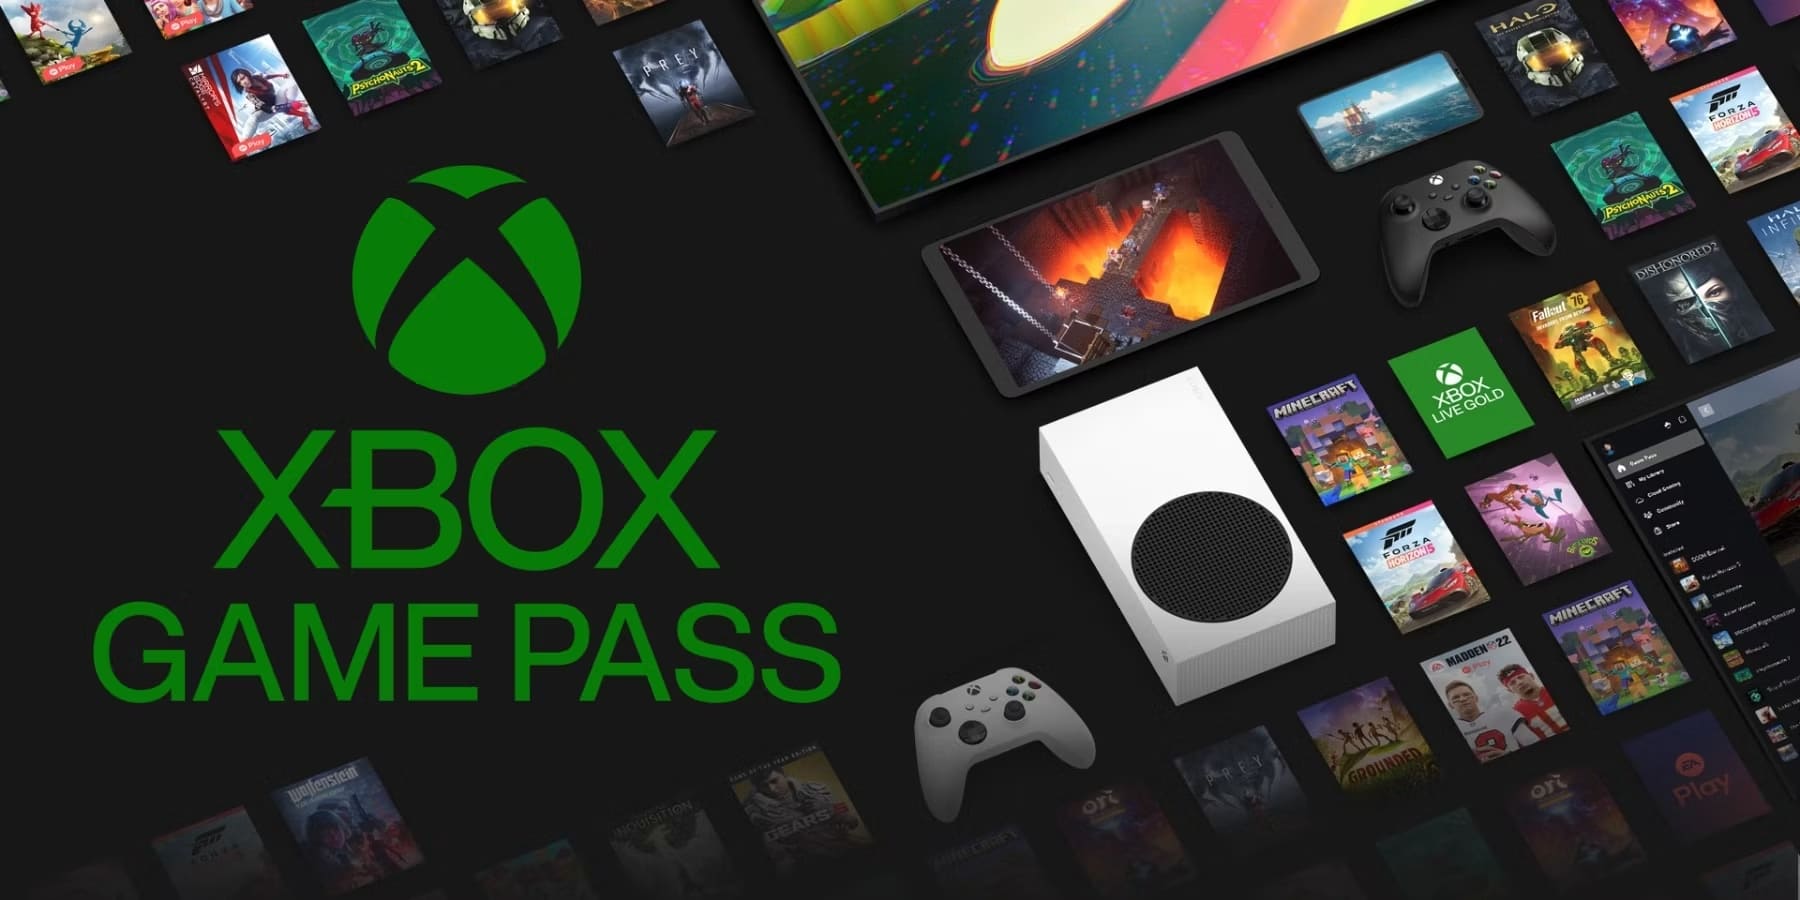 Xbox Game Pass Core คลังเกมสุดคุ้ม เพิ่มเติมความสนุก 3 เกมใหม่